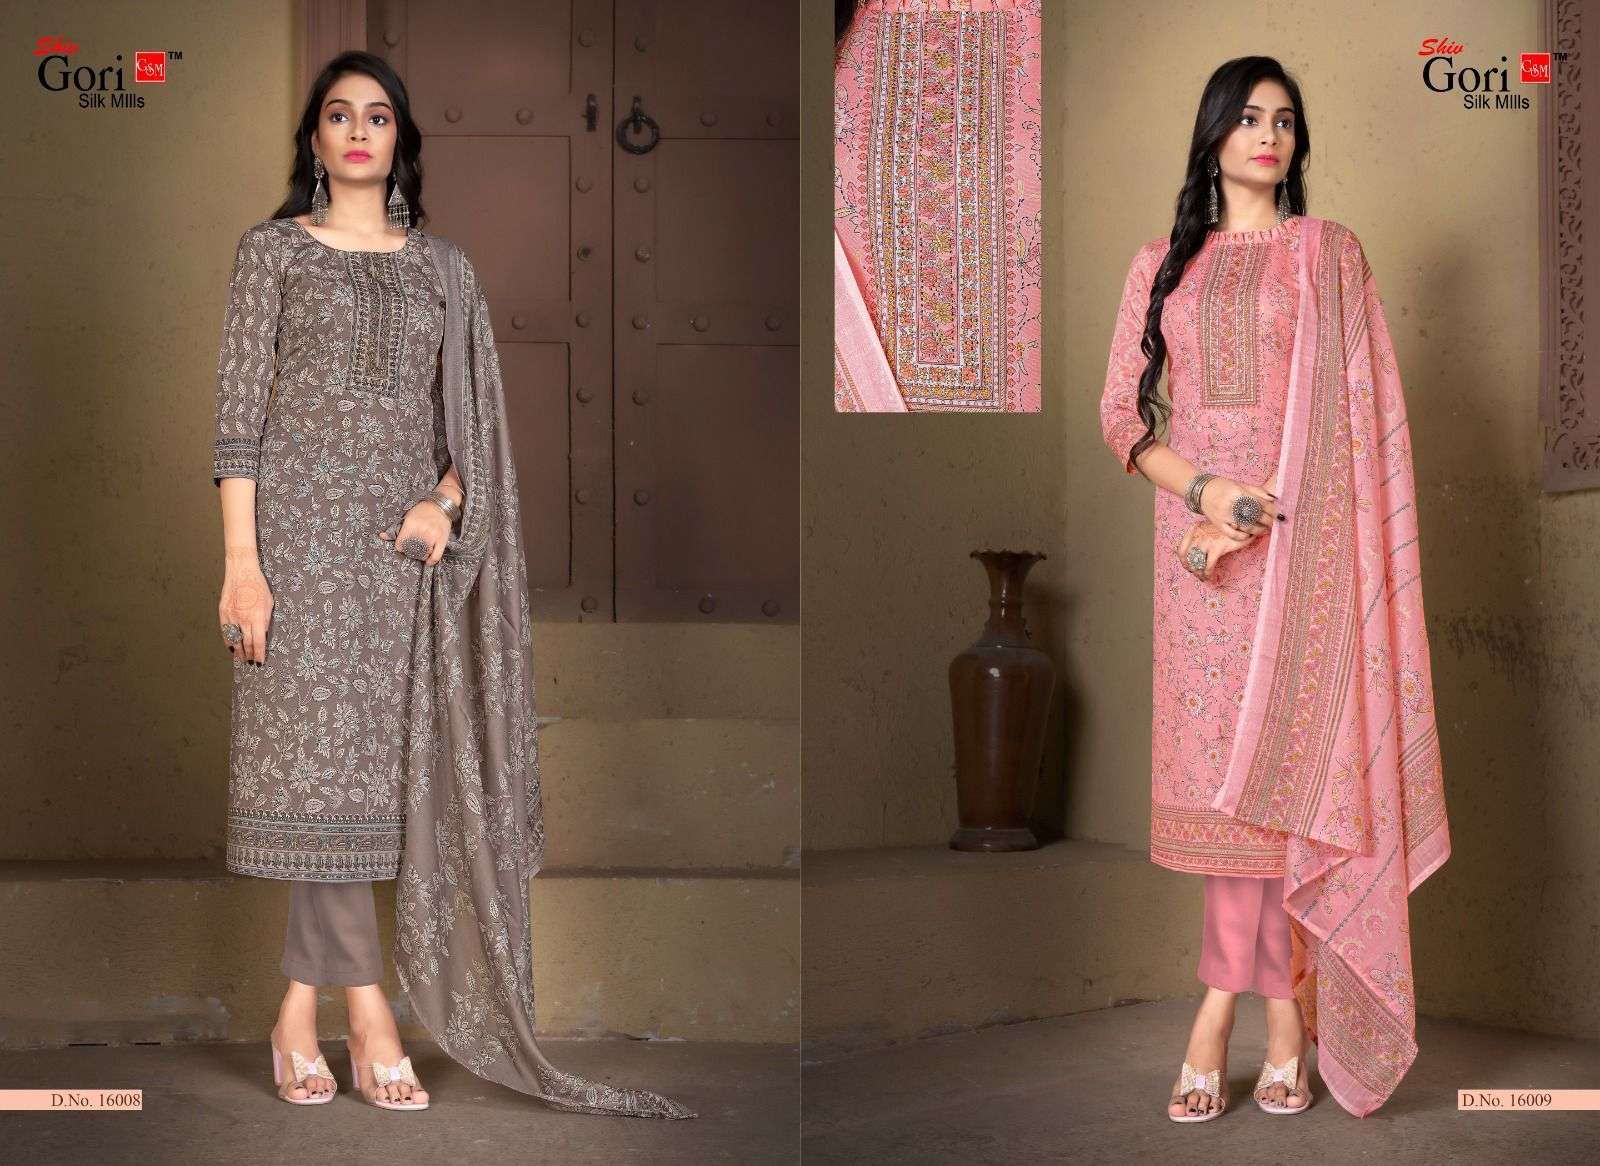 shiv gori silk mills pakizaa vol-16 16001-16012 series dress material catalogue wholesaler surat